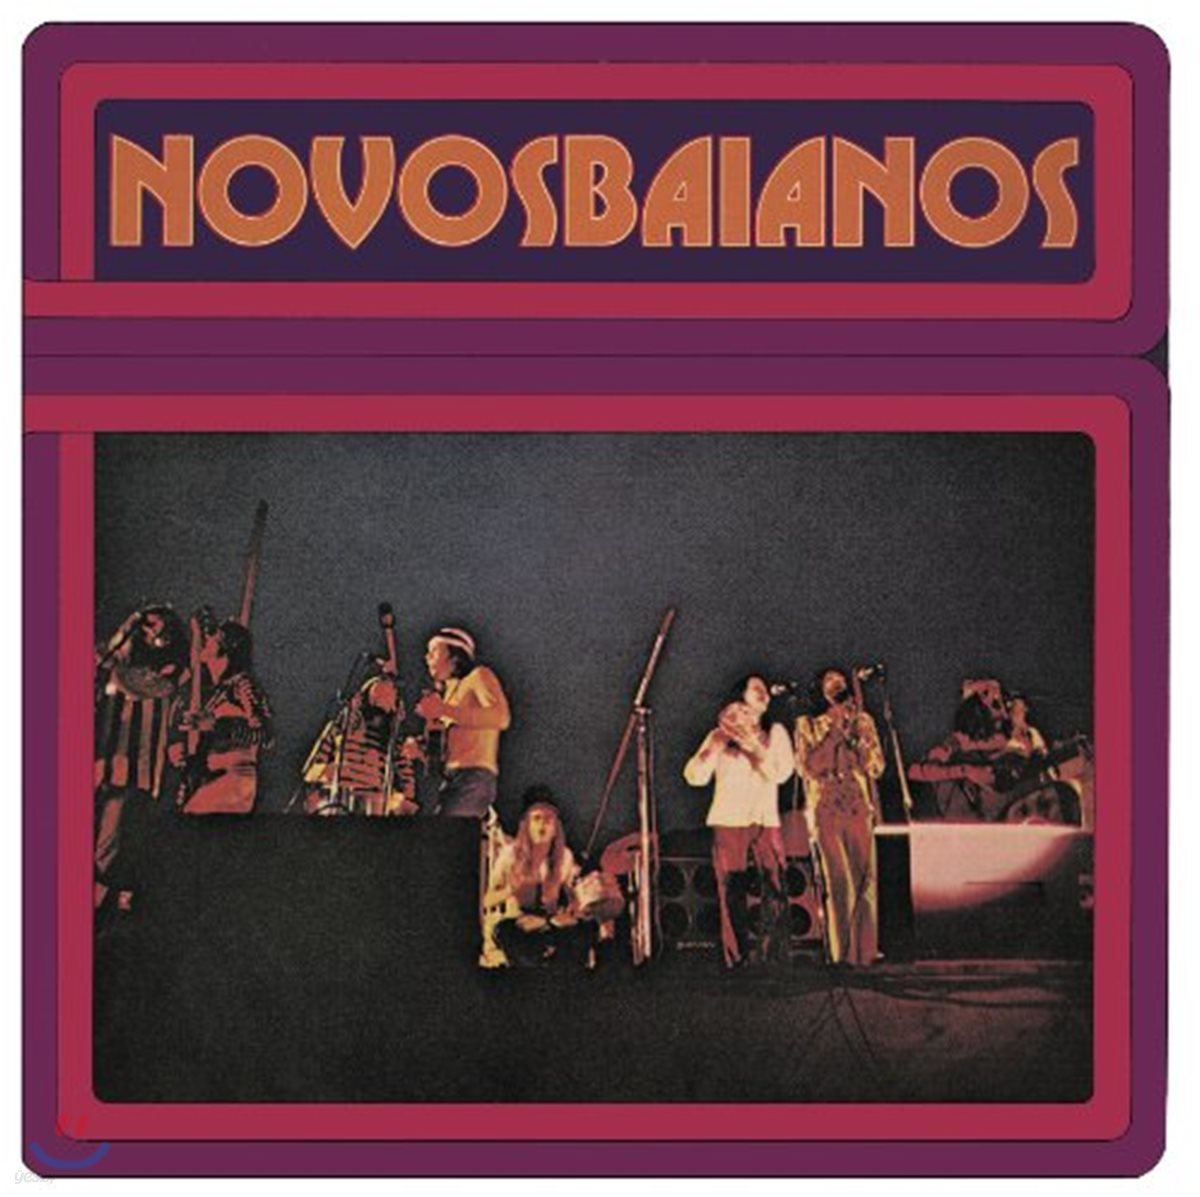 Novos Baianos (노부스 바이아누스) - Novos Baianos (1974)